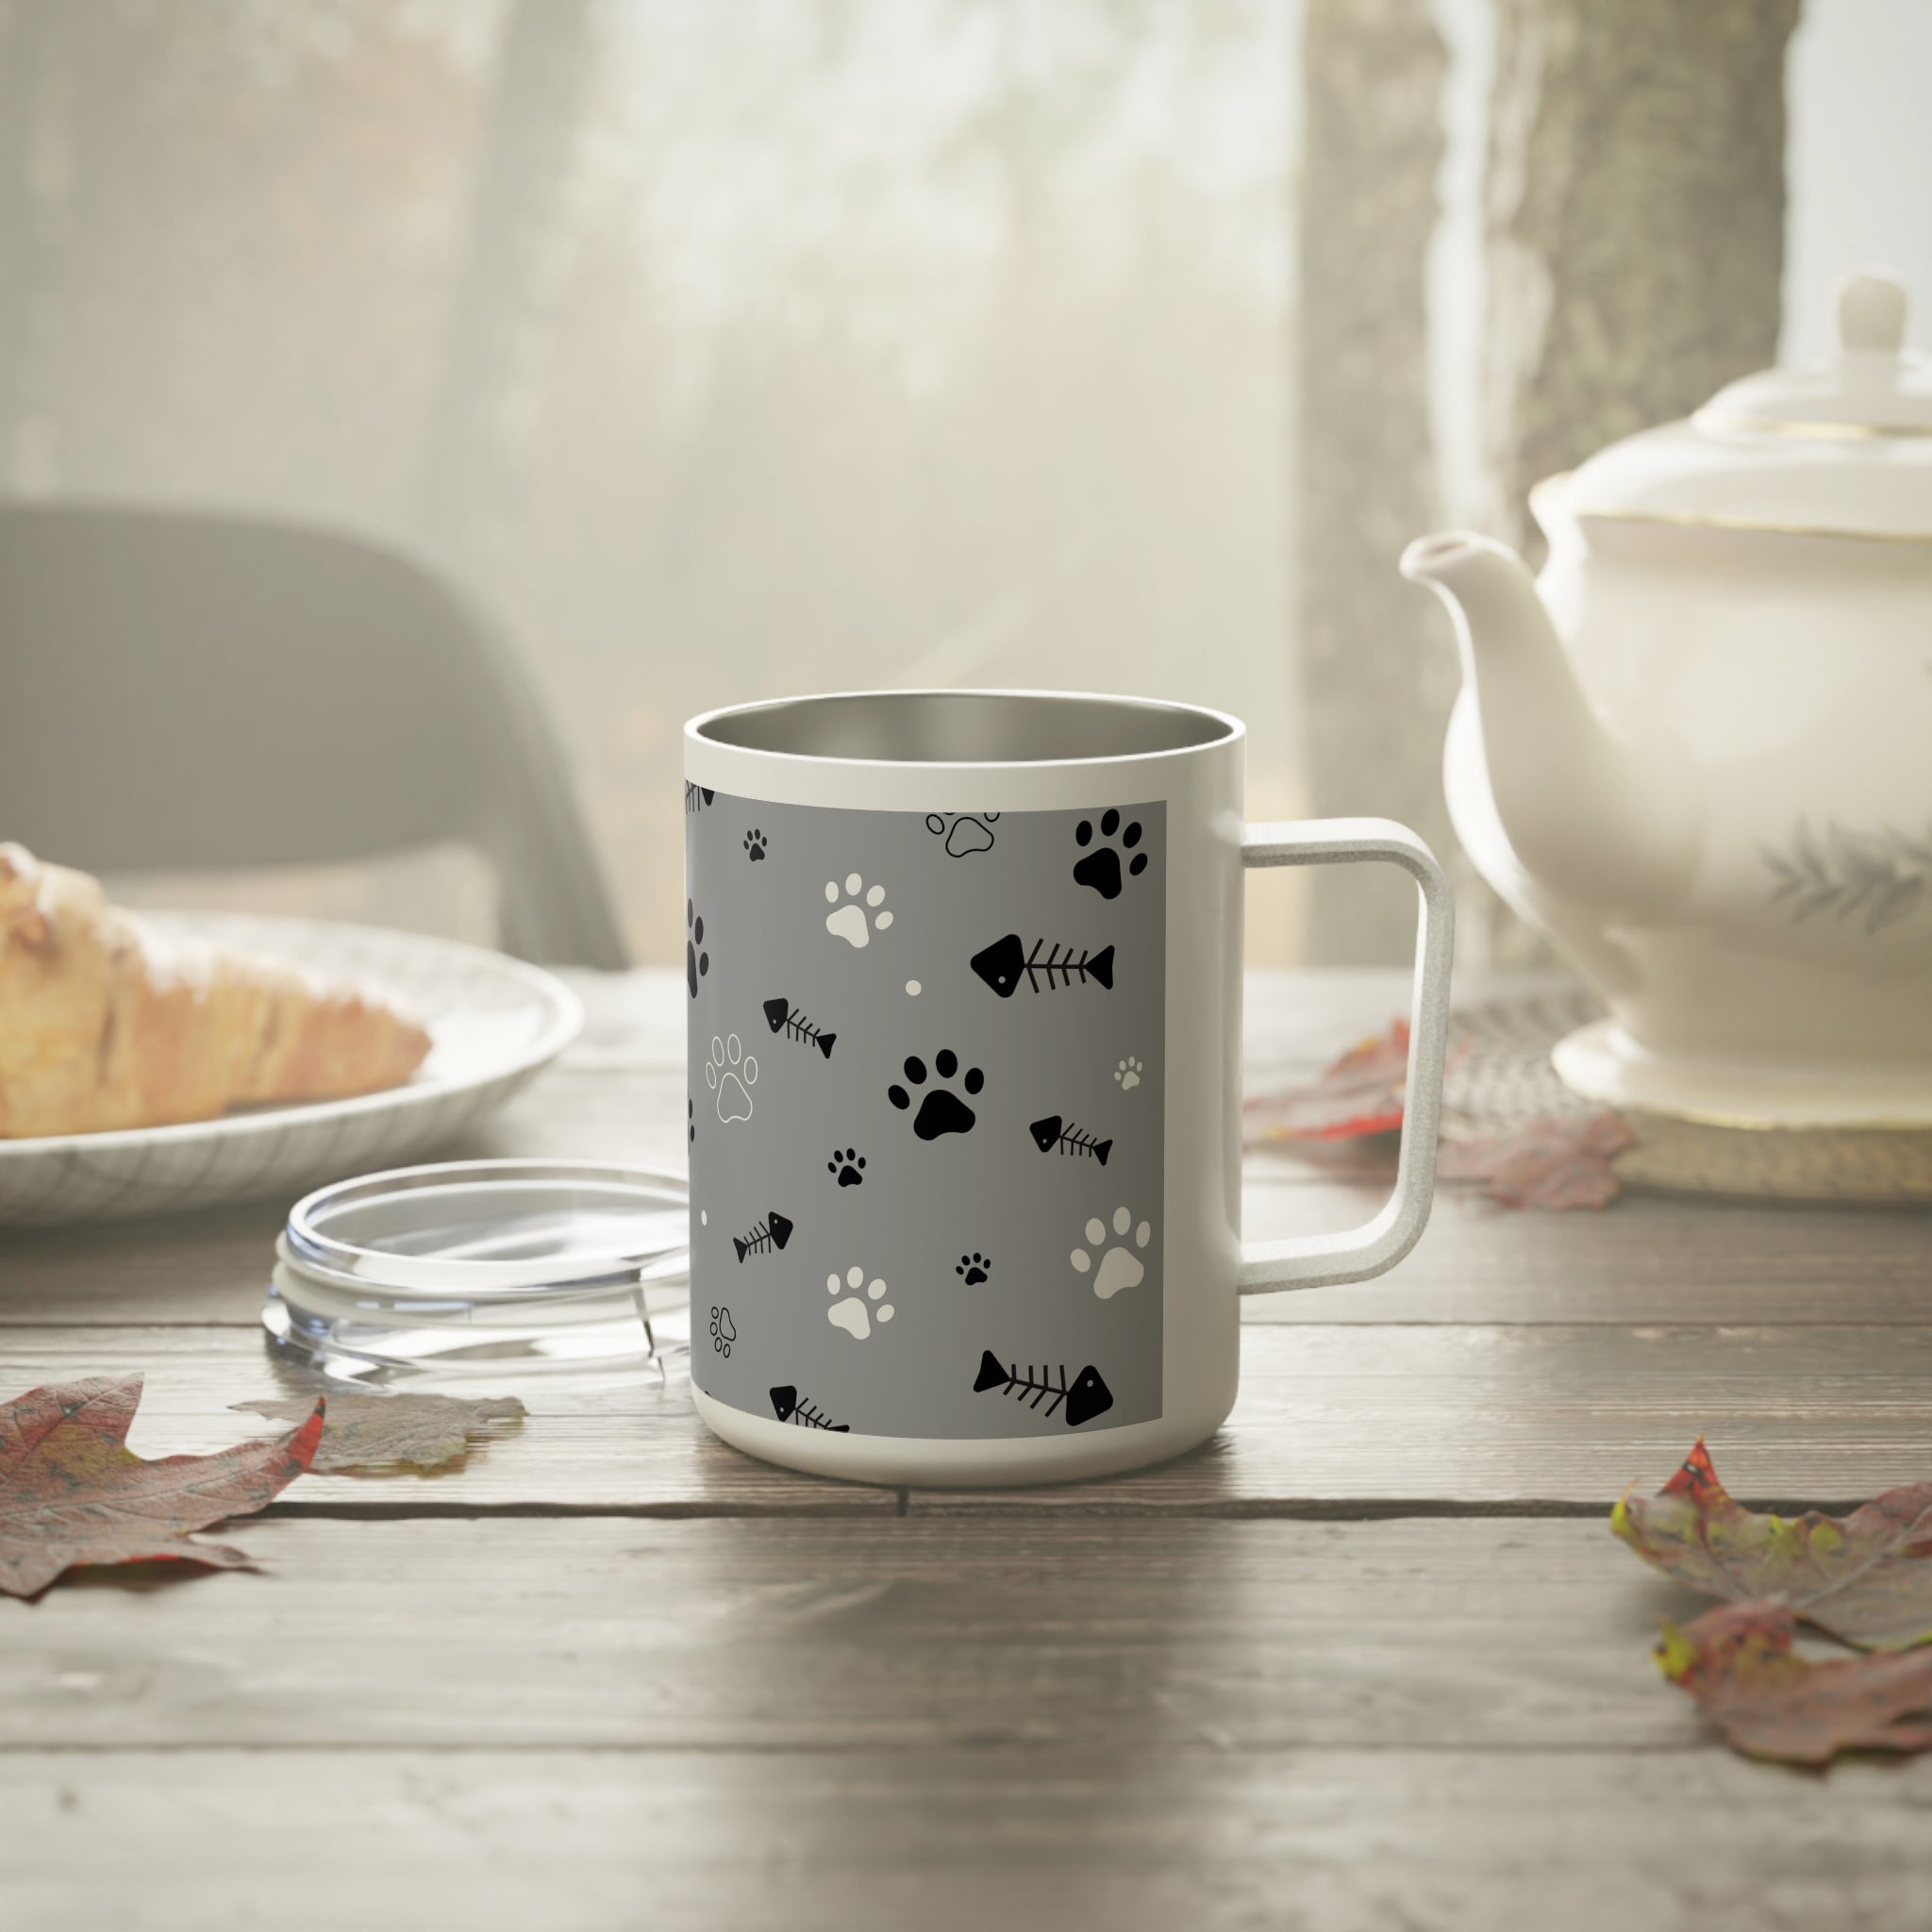 Coffee mug with tiny paw marks and fishbone pattern